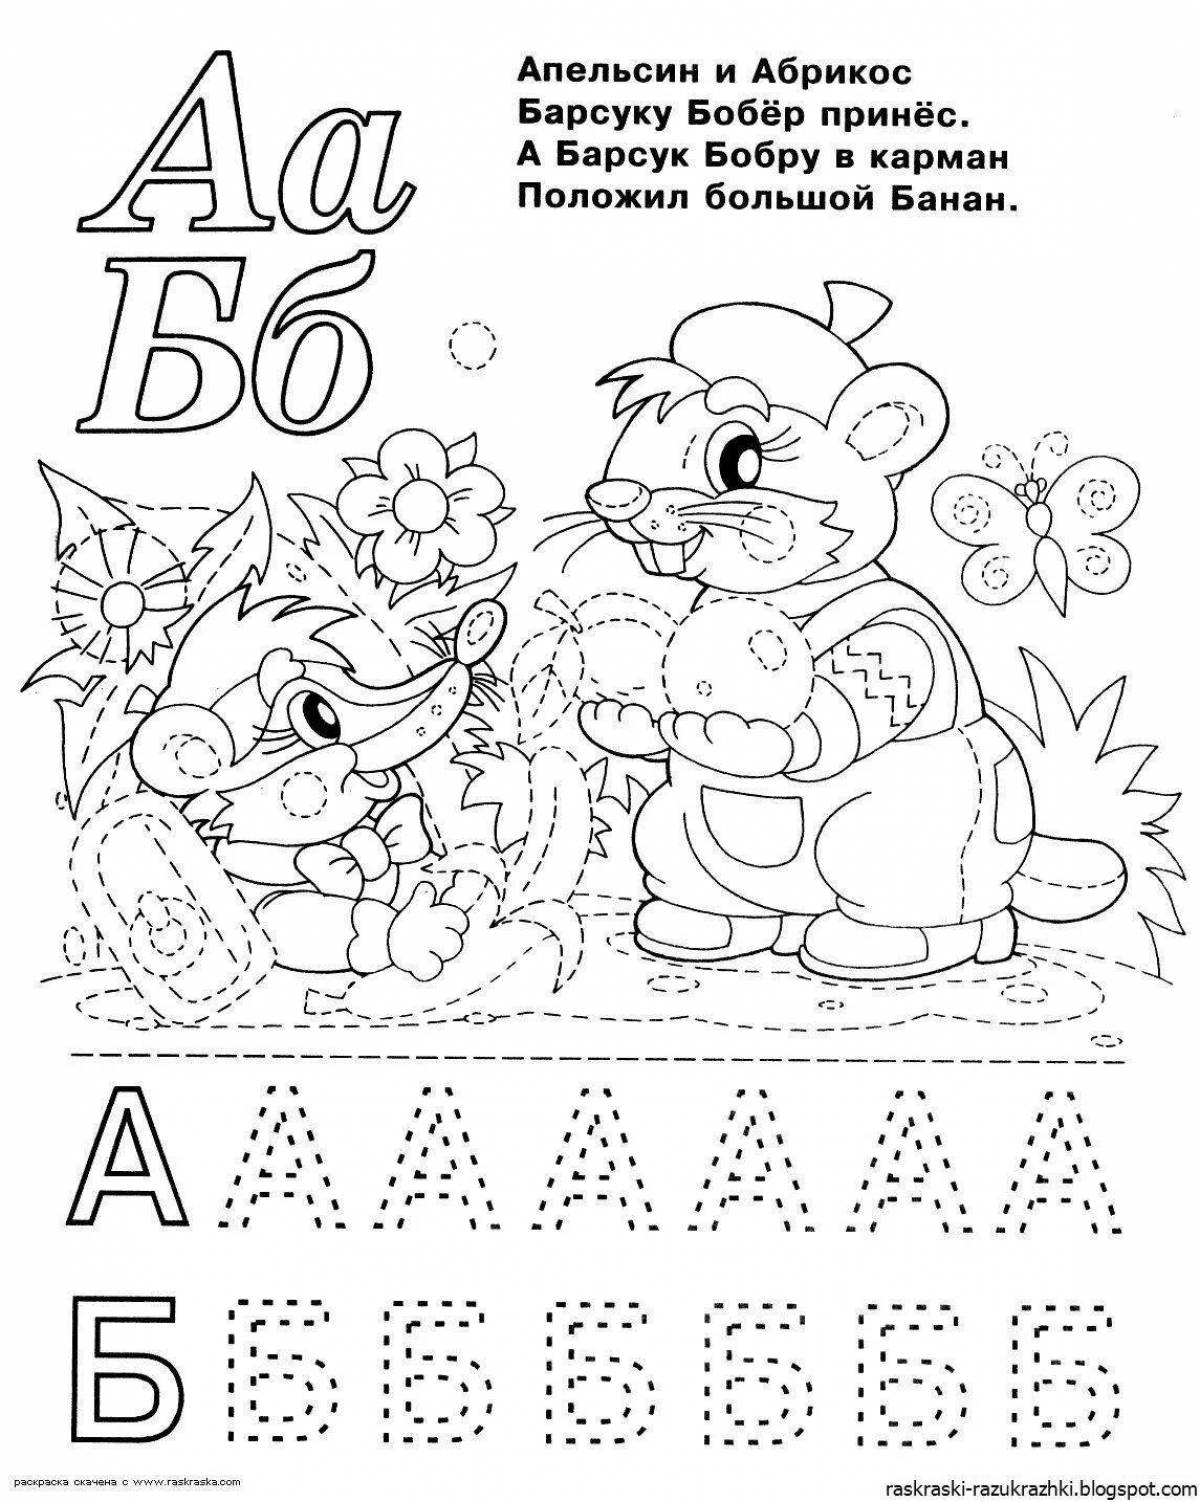 Alphabet for children 5 6 years old #5